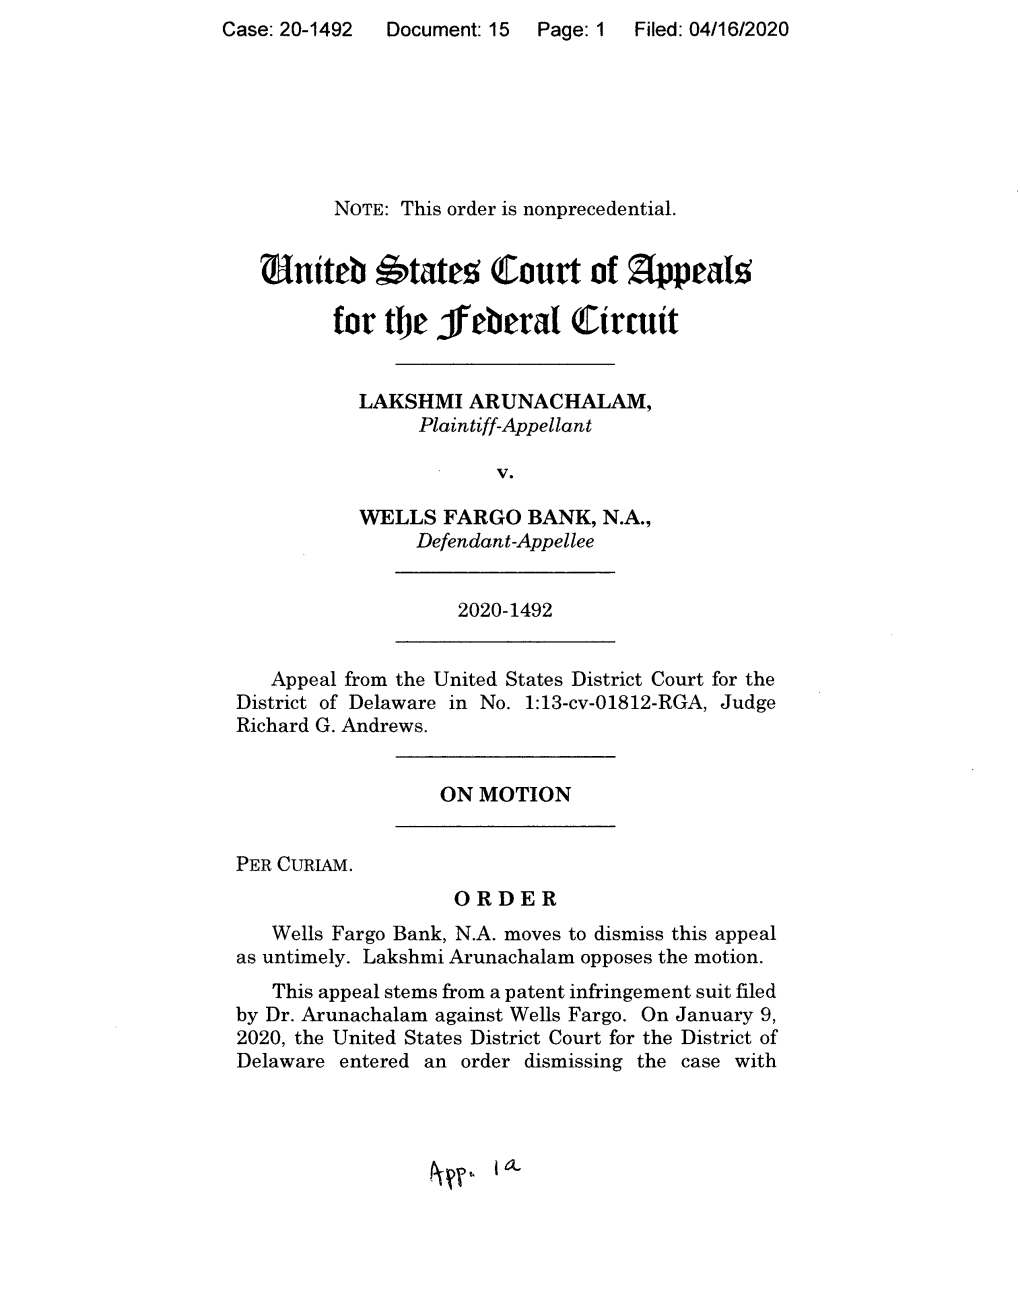 Shuteti States Court of Appeals Fortljcjfeberal Circuit